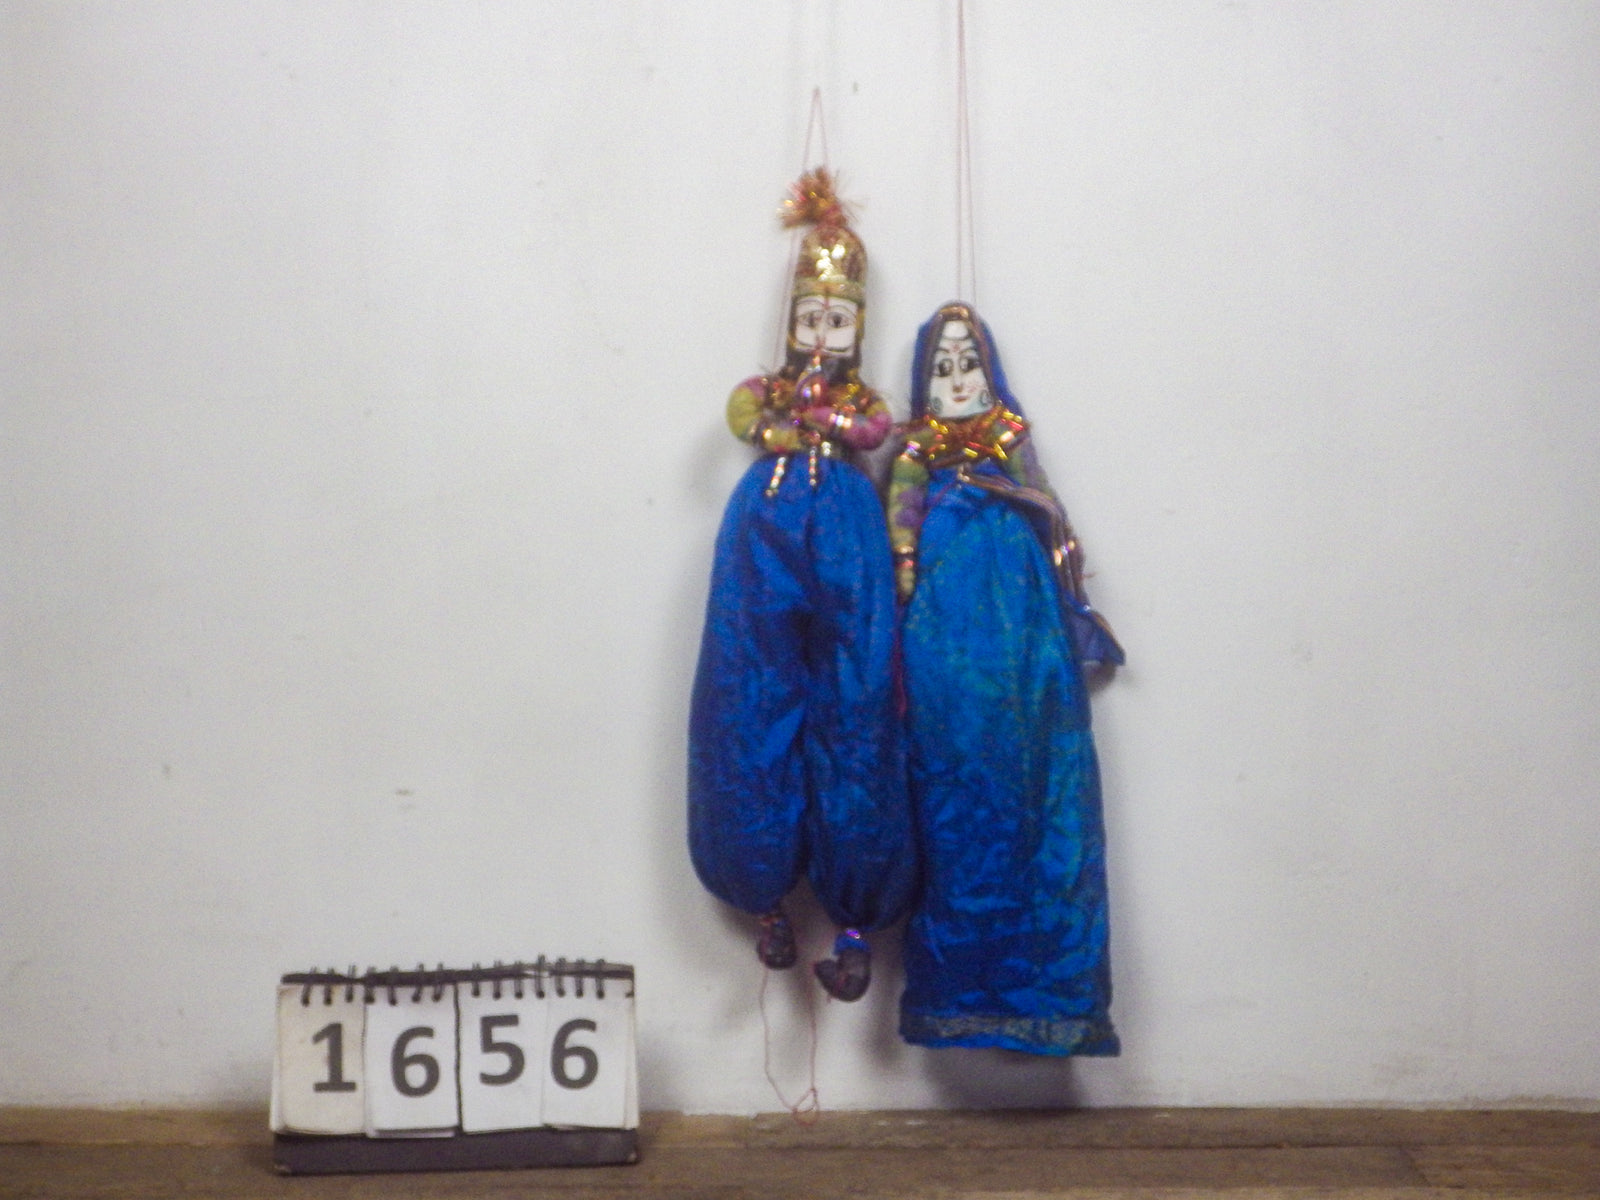 MILL-1656 Pair of Dolls C20